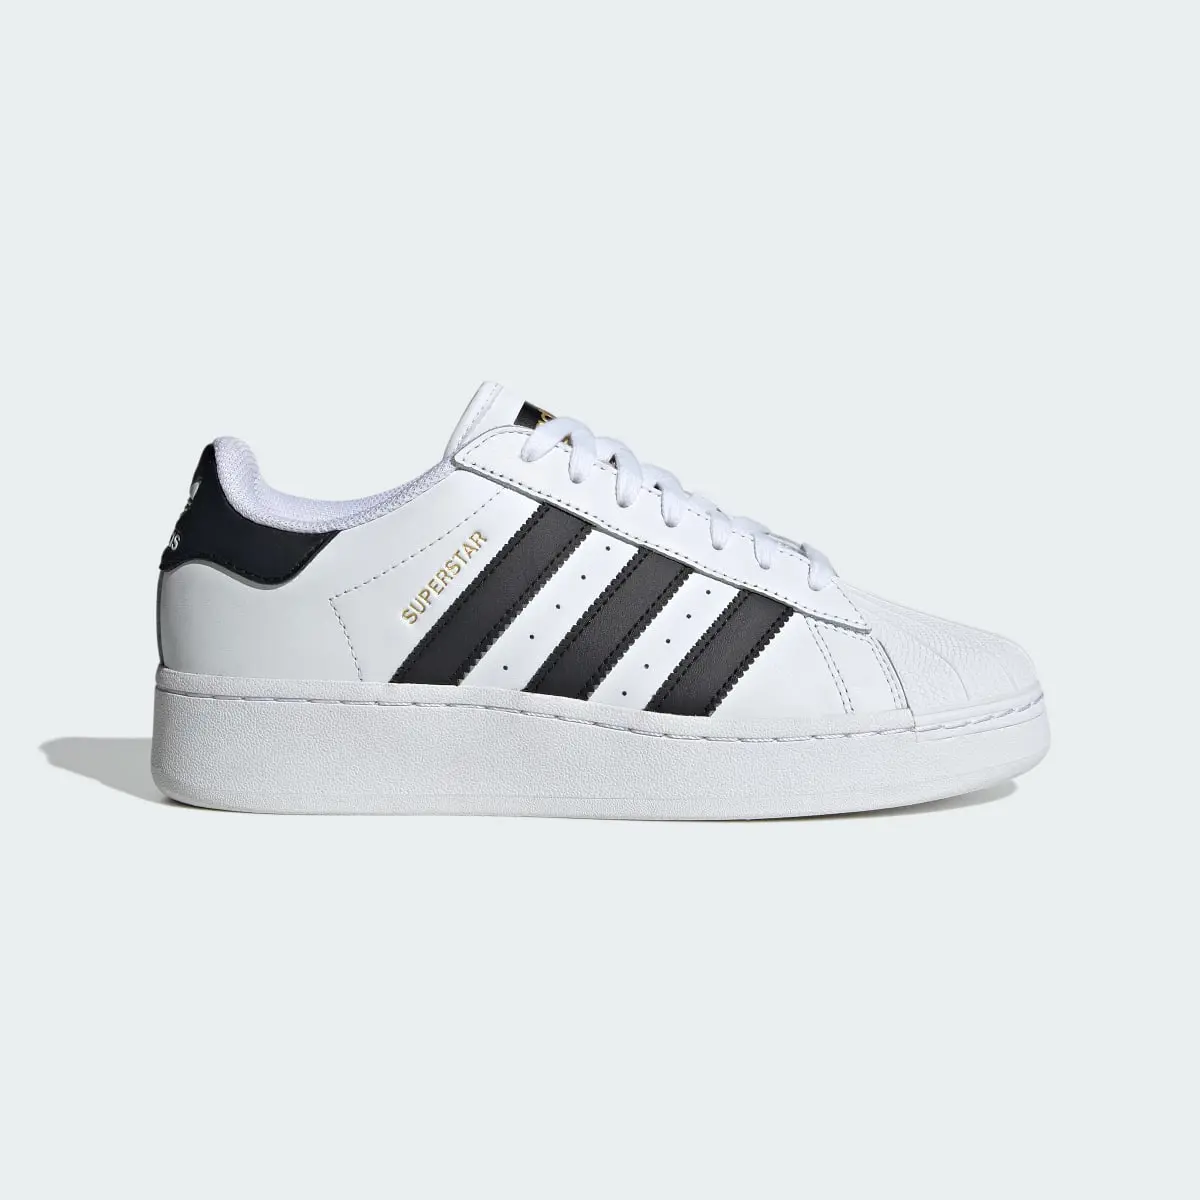 Adidas Superstar XLG Ayakkabı. 2